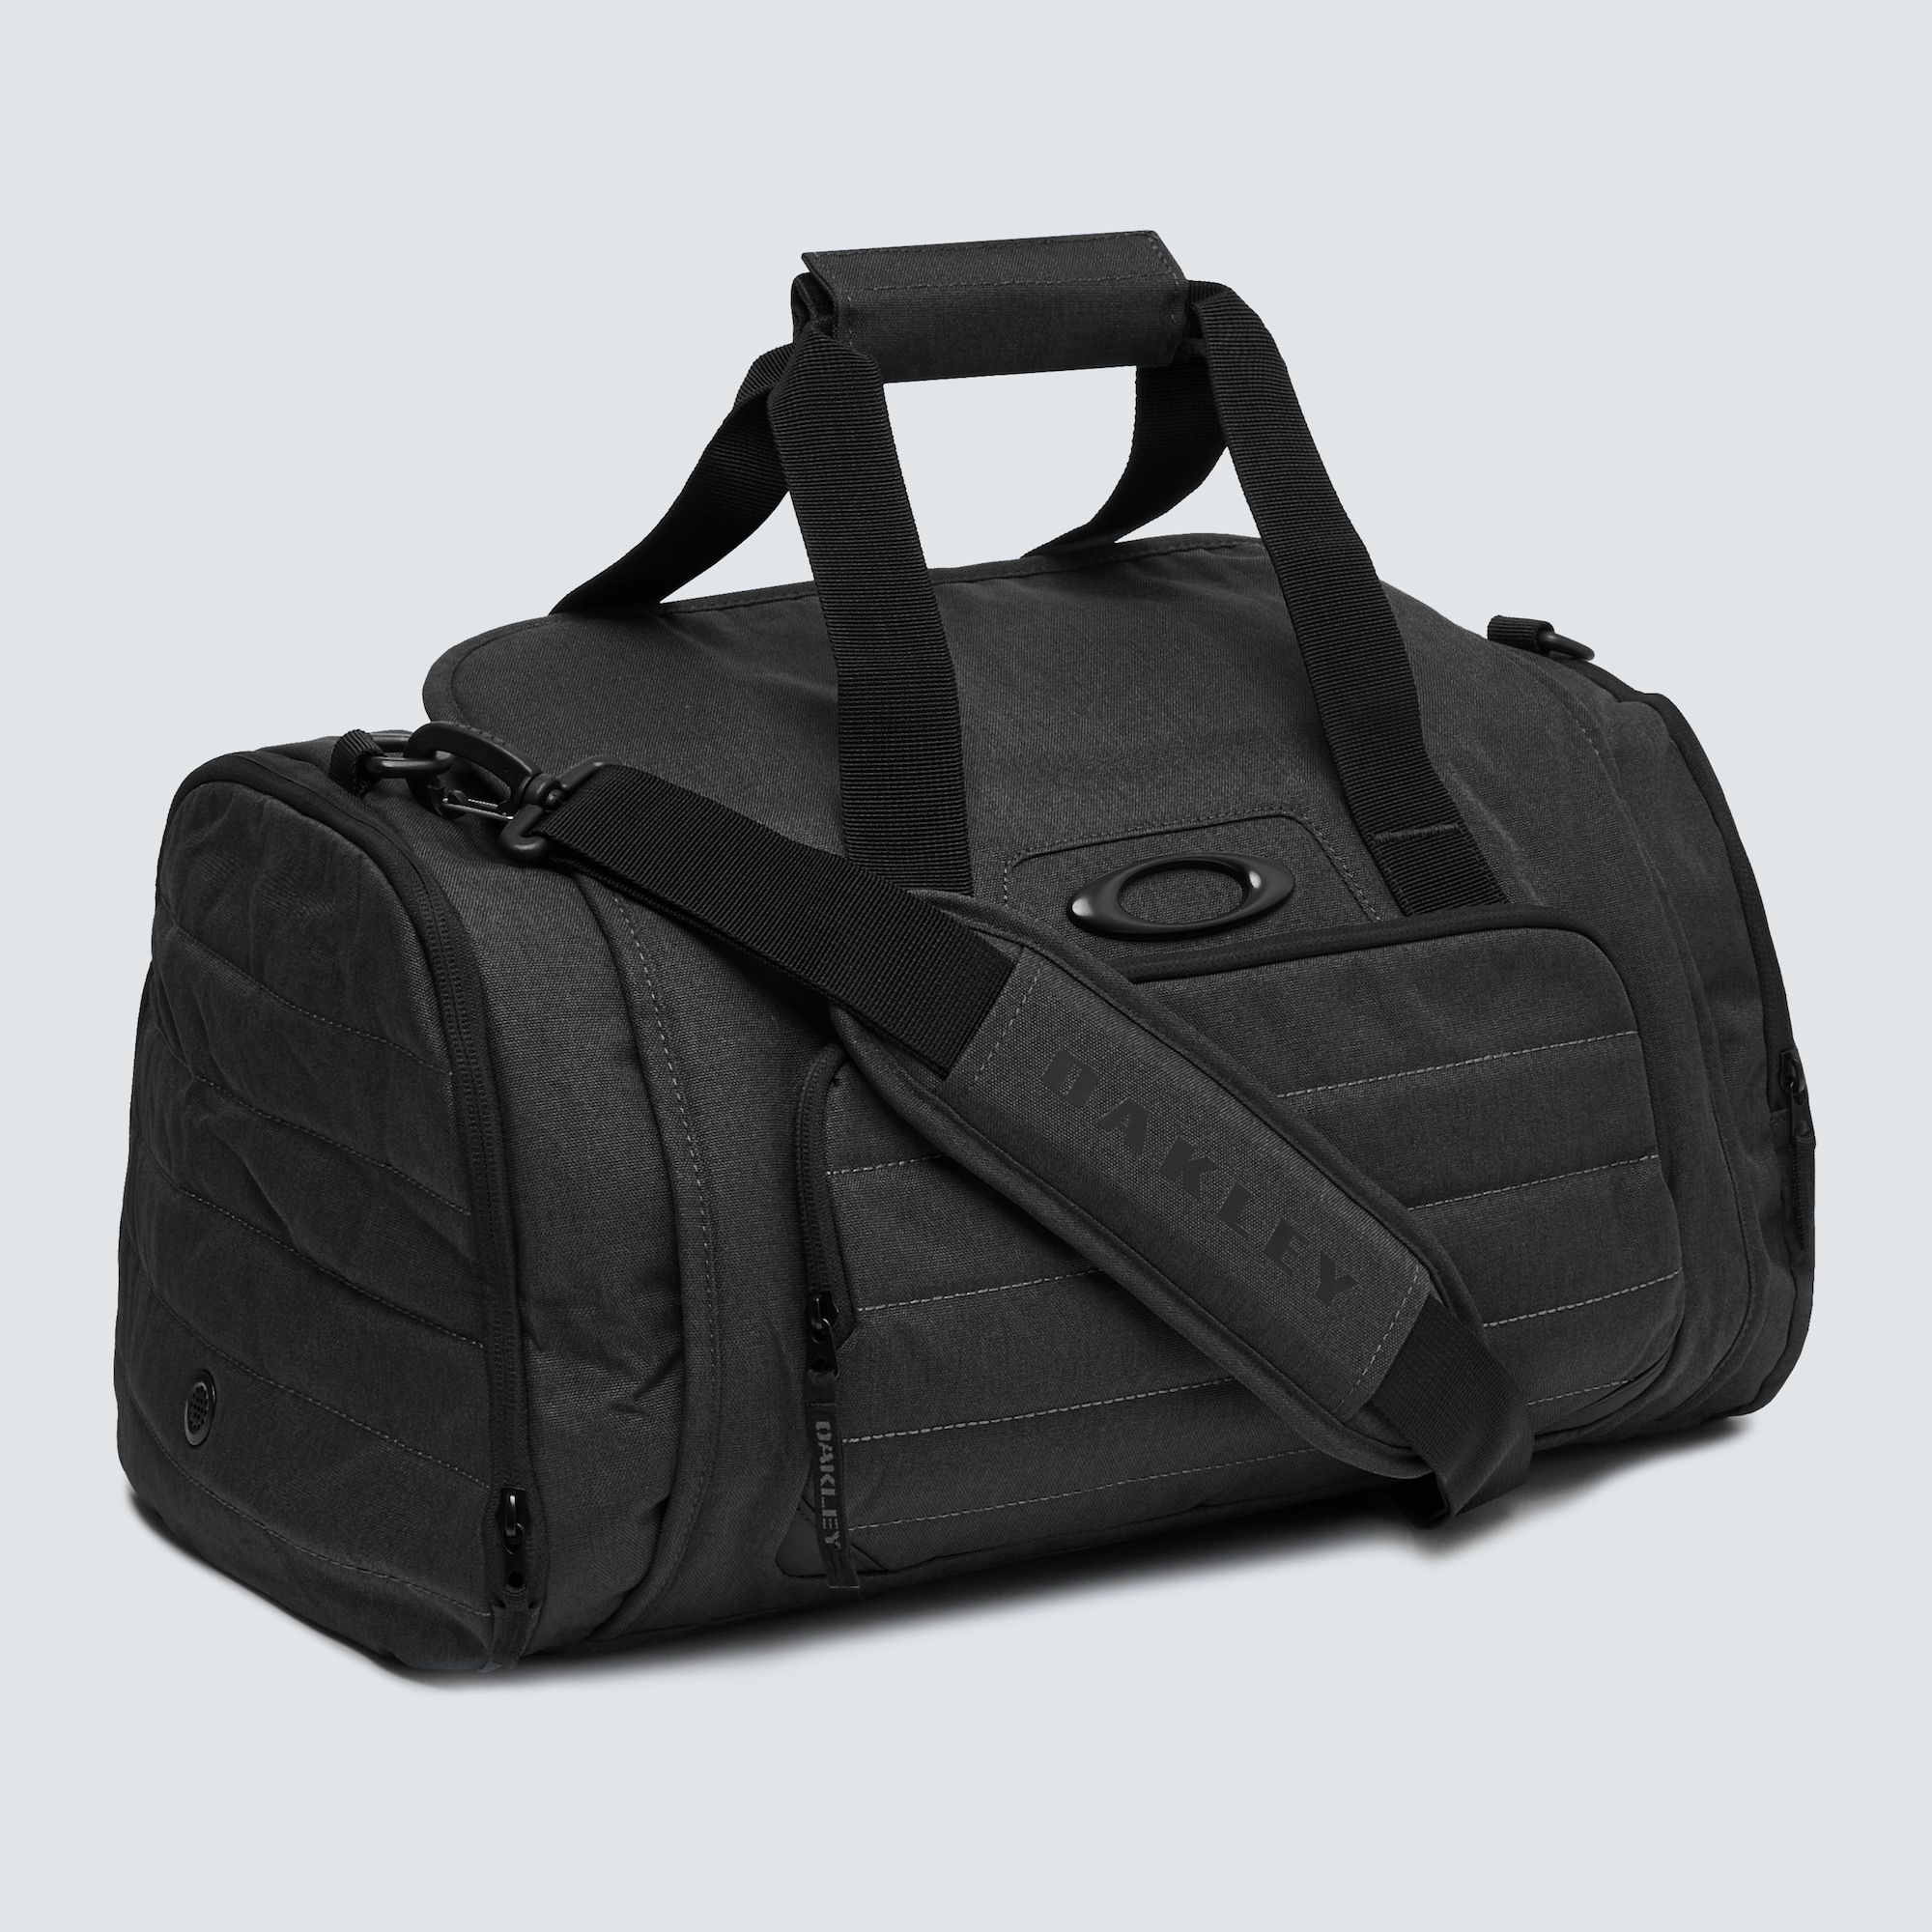  Oakley Enduro 3.0 Duffel Bag - Blackout 